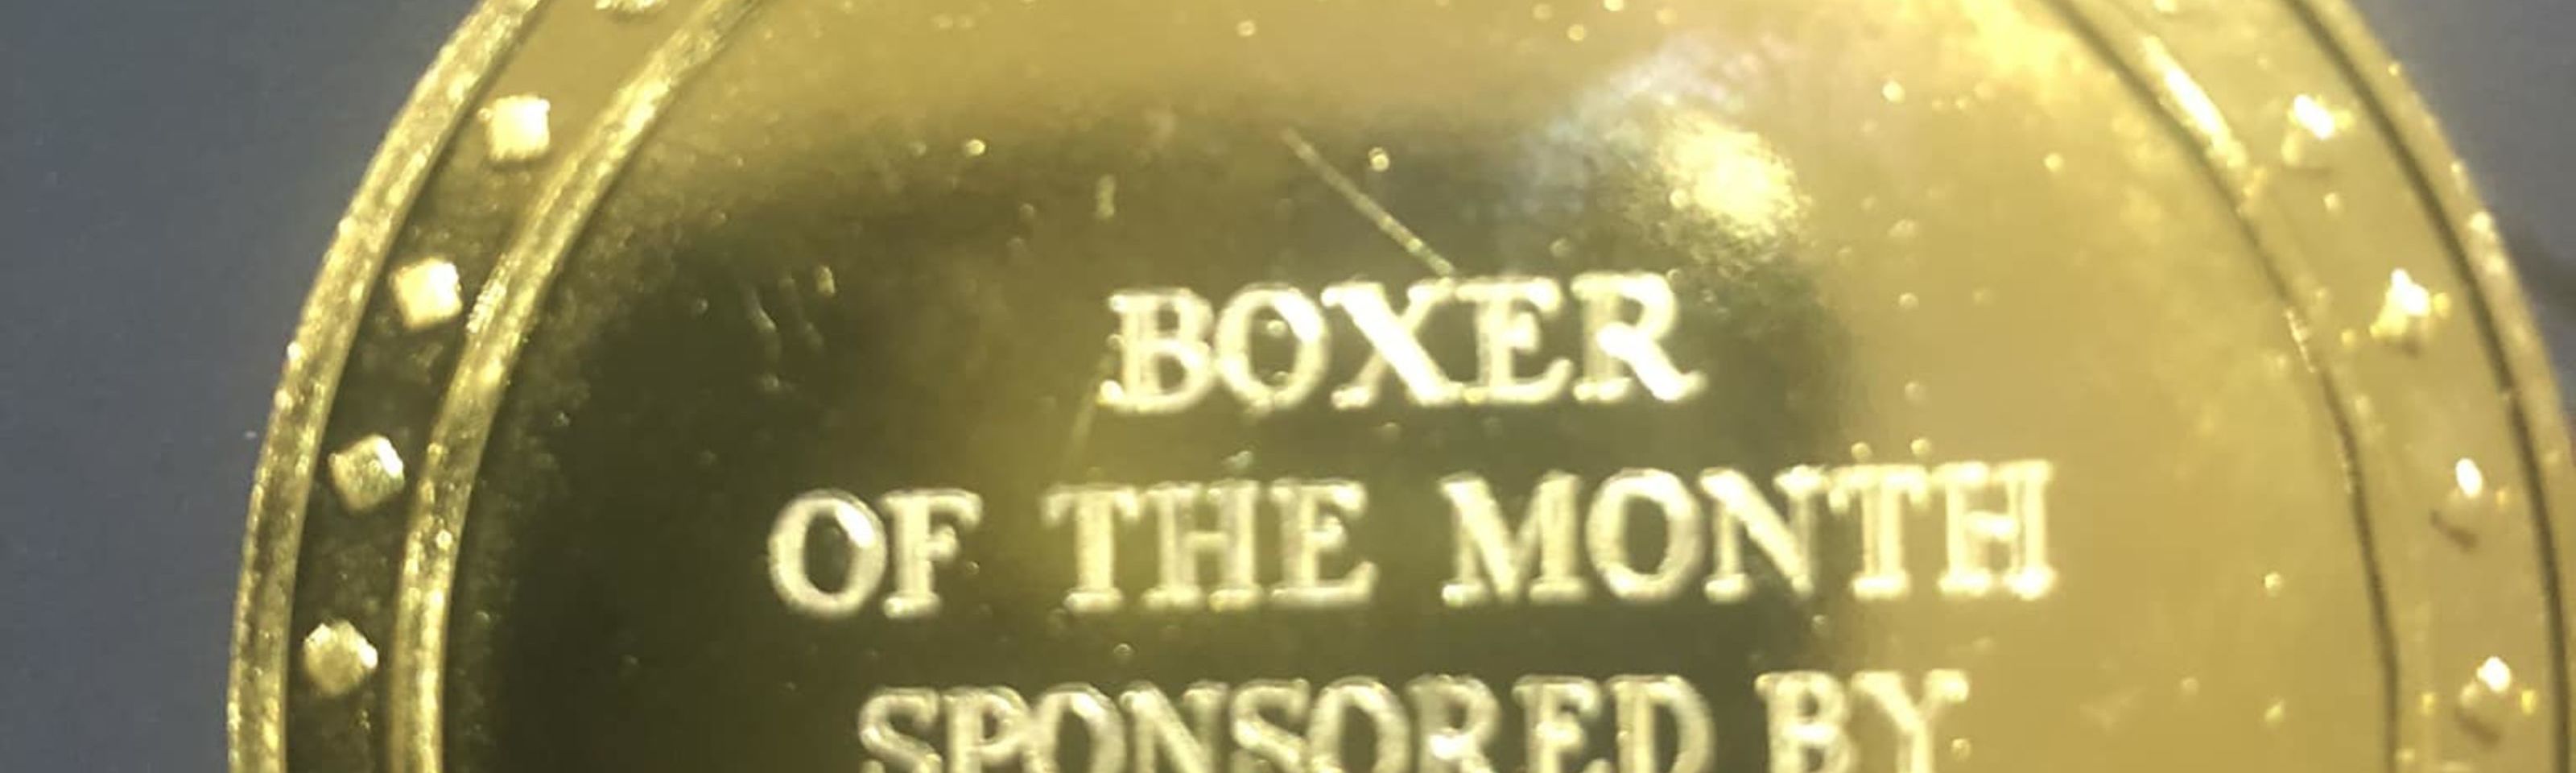 Bachmann Sponsors Guernsey Boxing